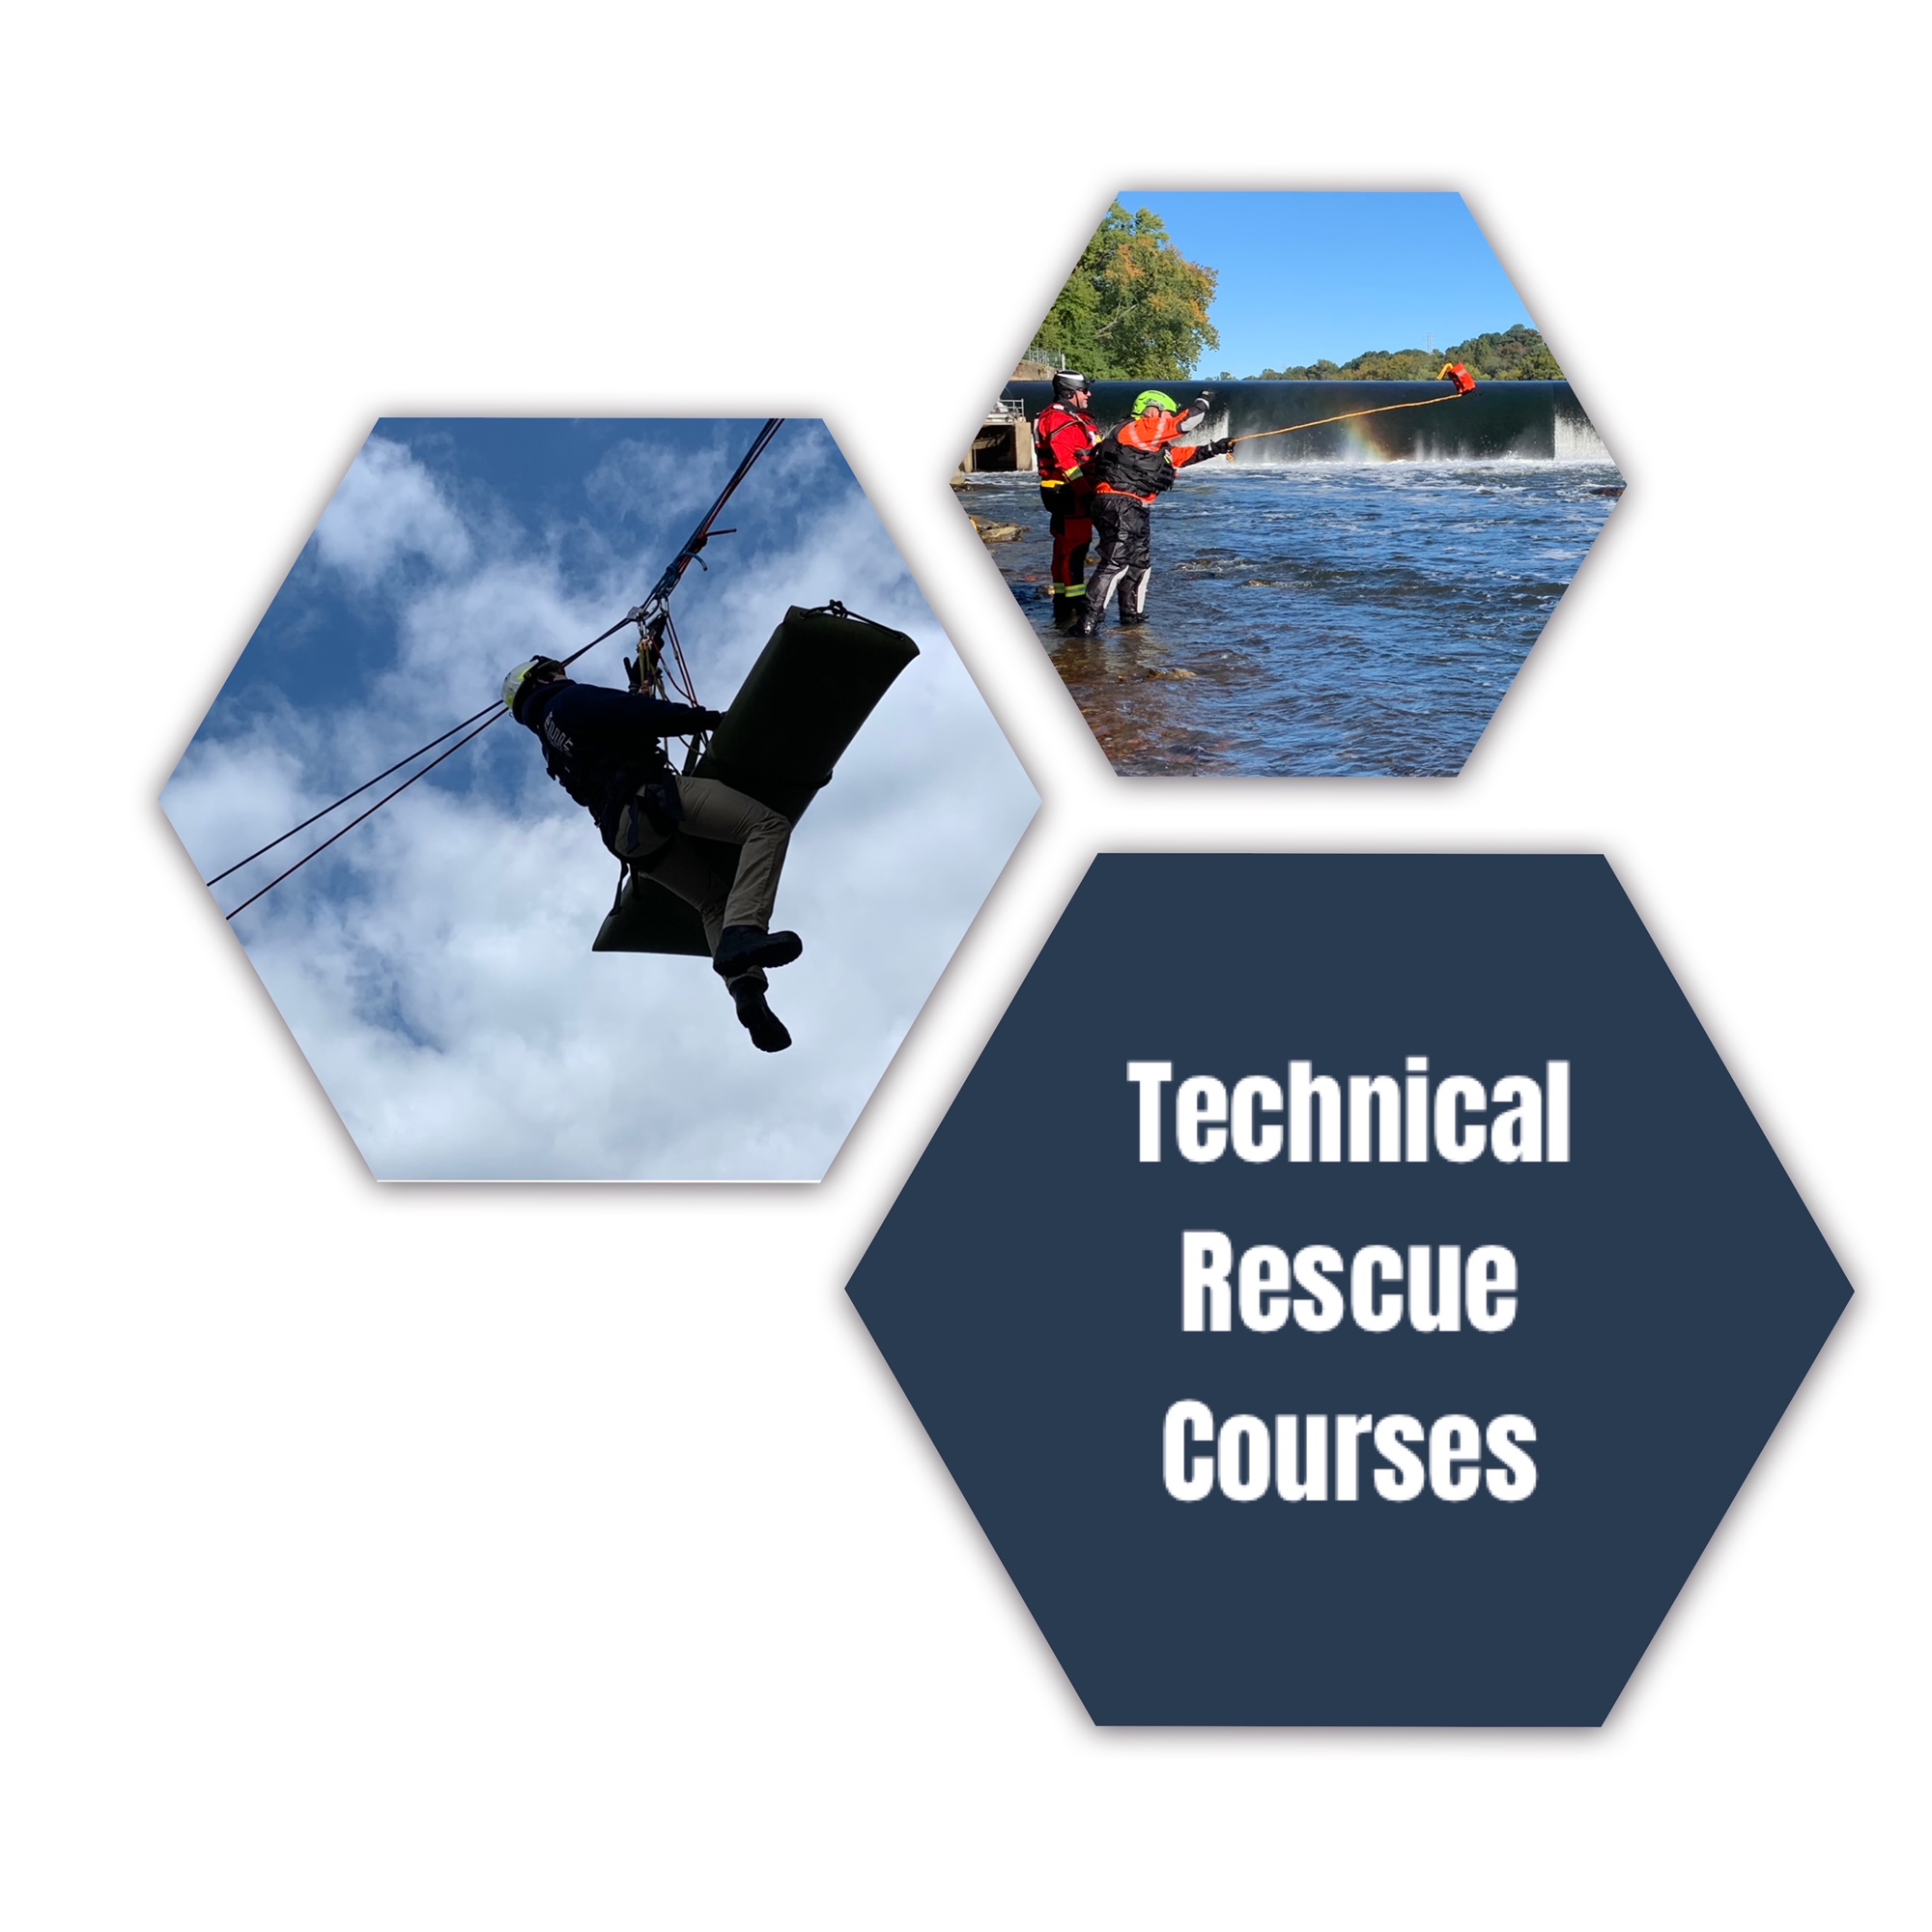 Technical Rescue Courses